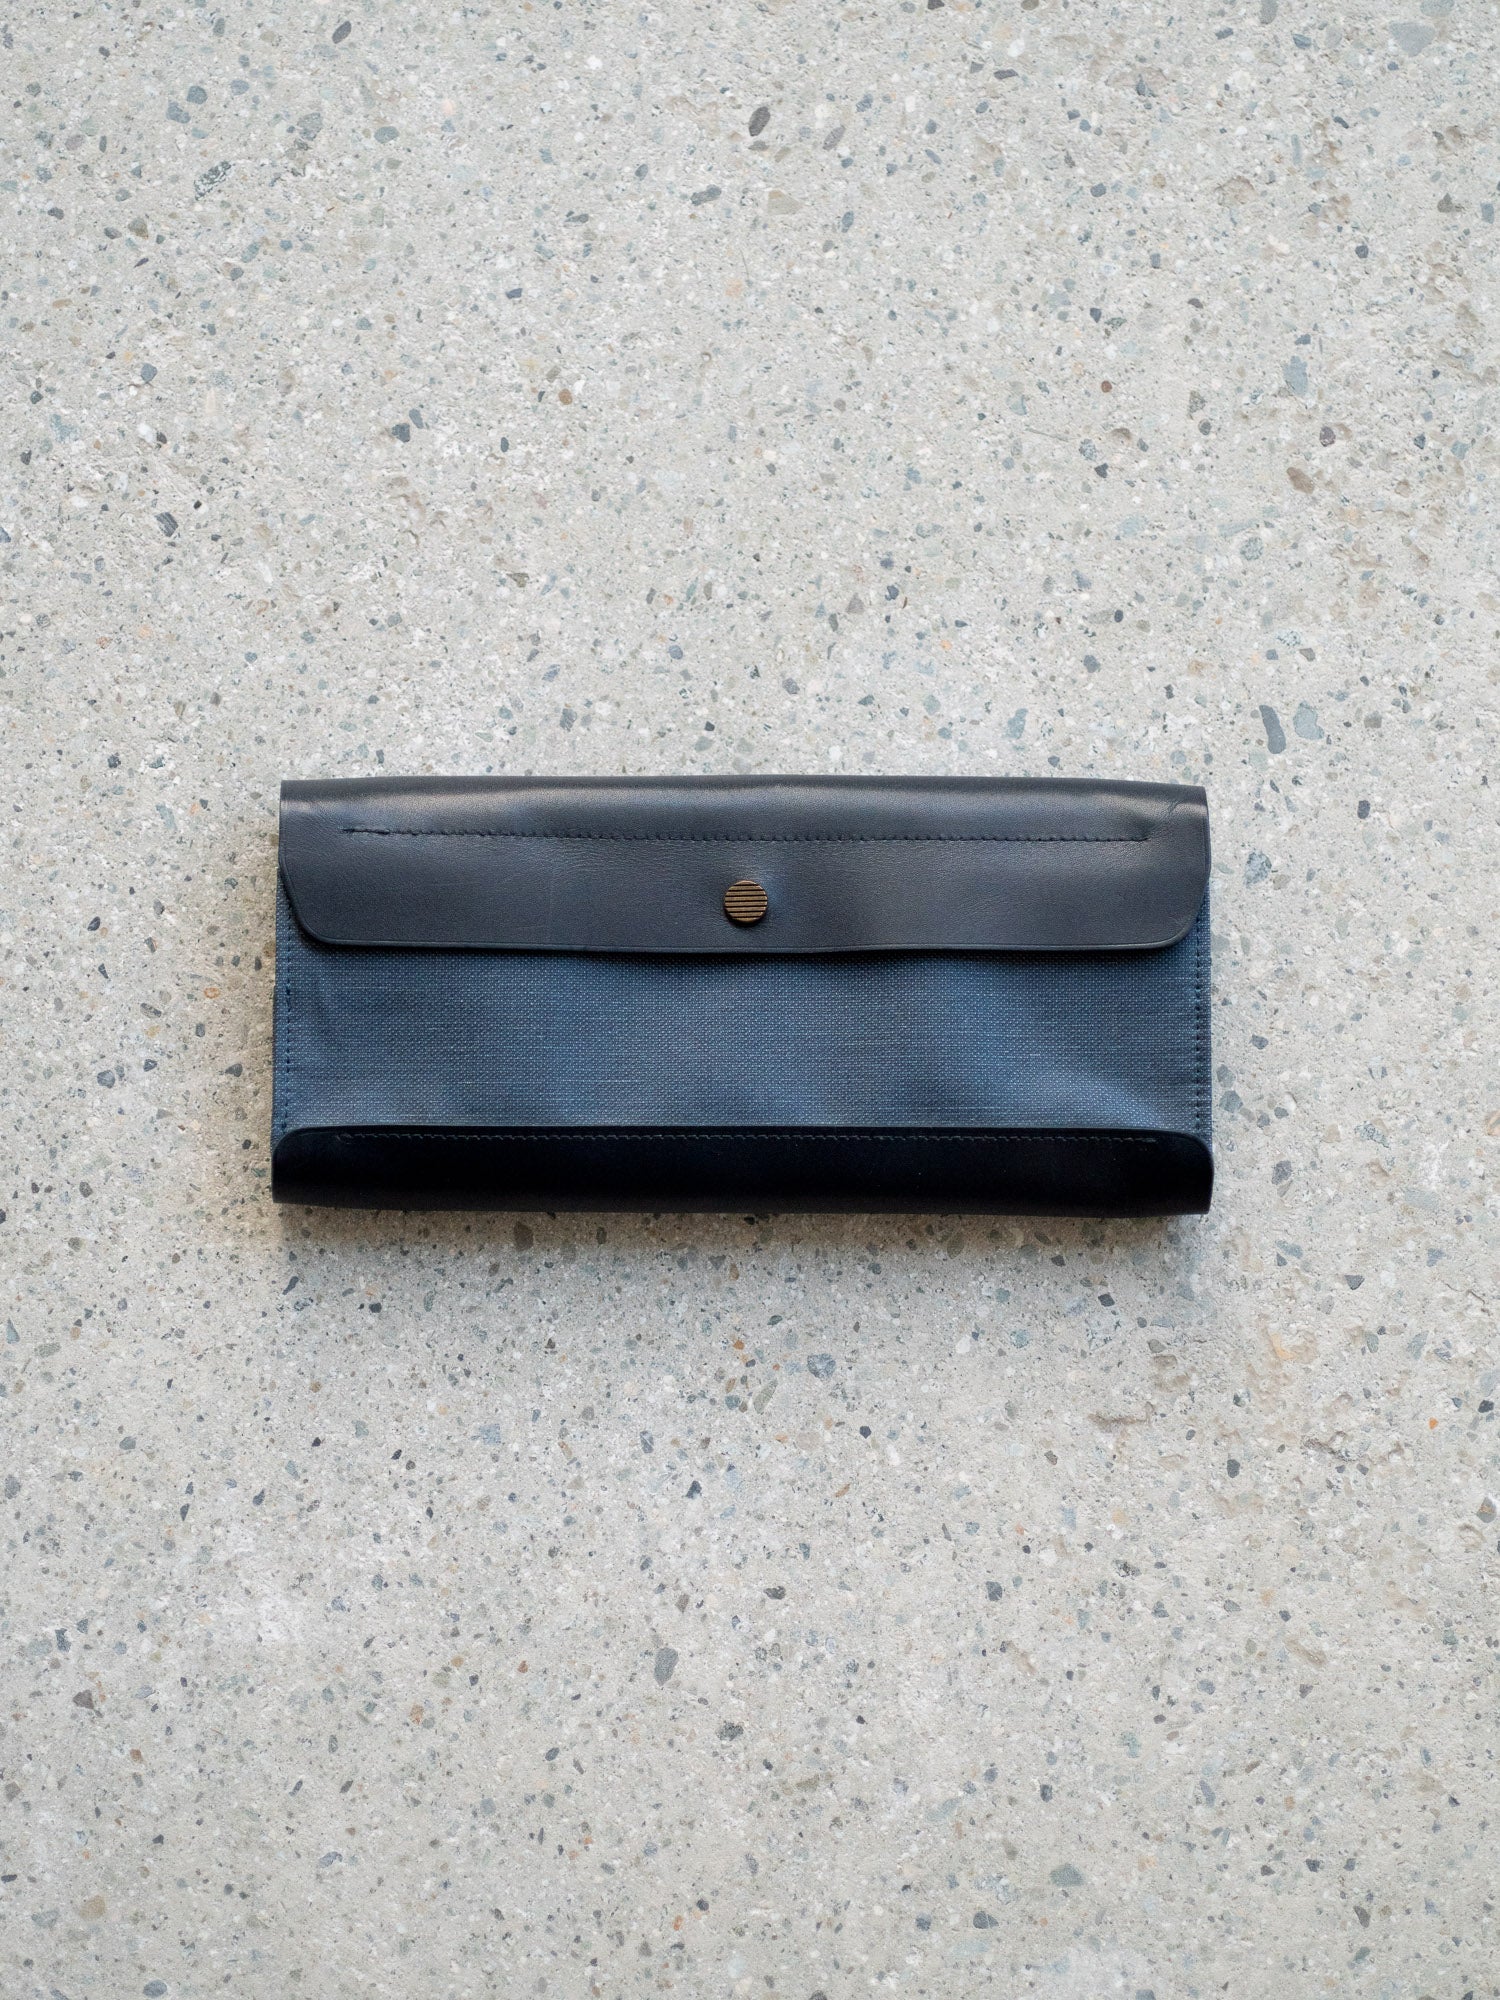 Postalco Tool Box – Navy Blue